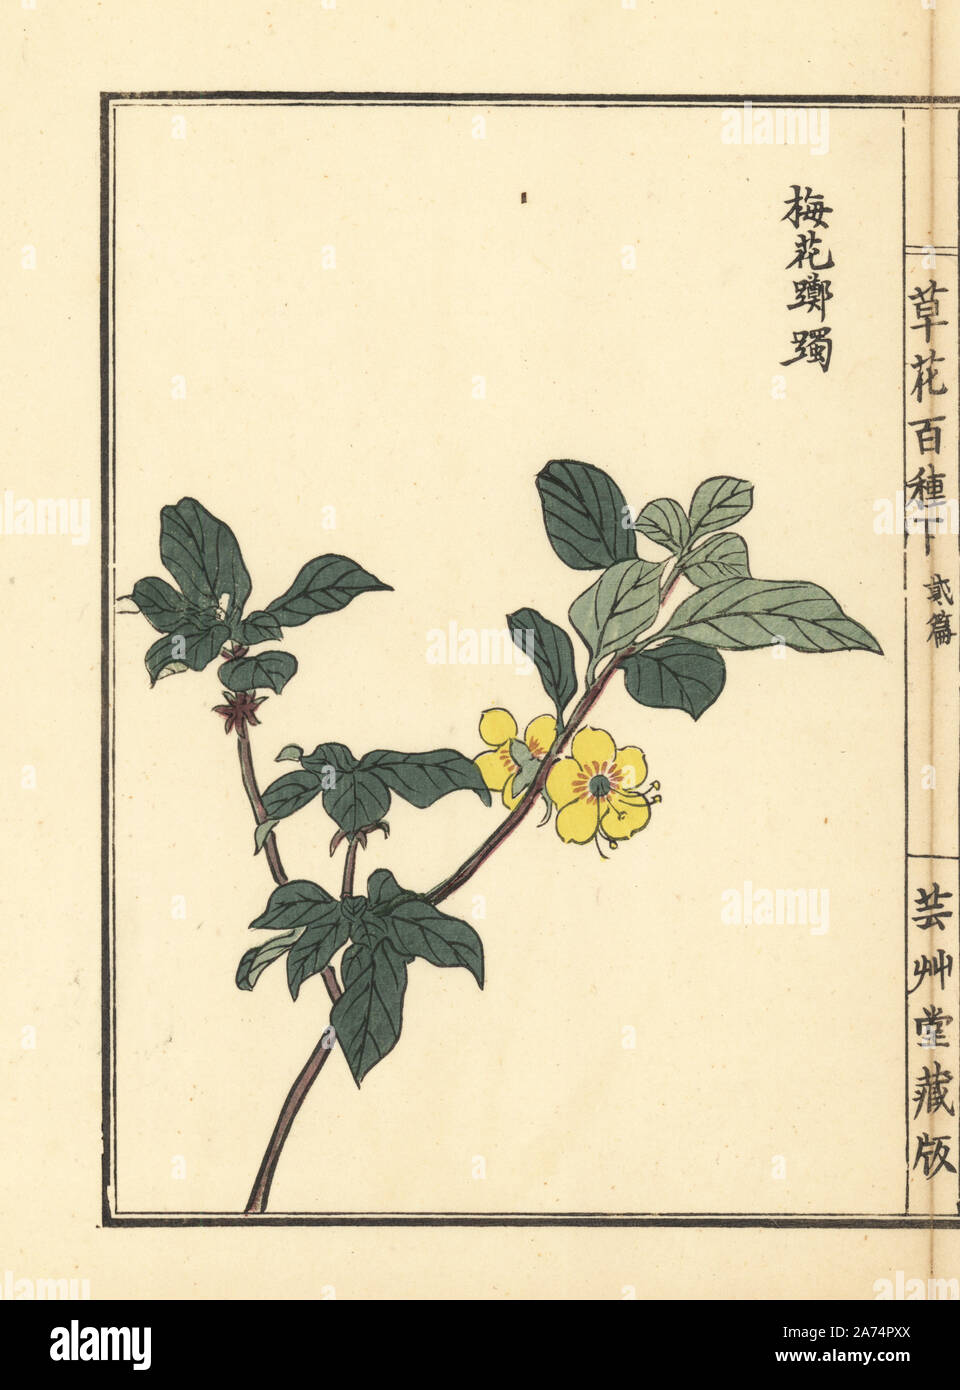 Baika tsutsuji or yellow azalea, Rhododendron species. Handcoloured woodblock print by Kono Bairei from Kusa Bana Hyakushu (One Hundred Varieties of Flowers), Tokyo, Yamada, 1901. Stock Photo